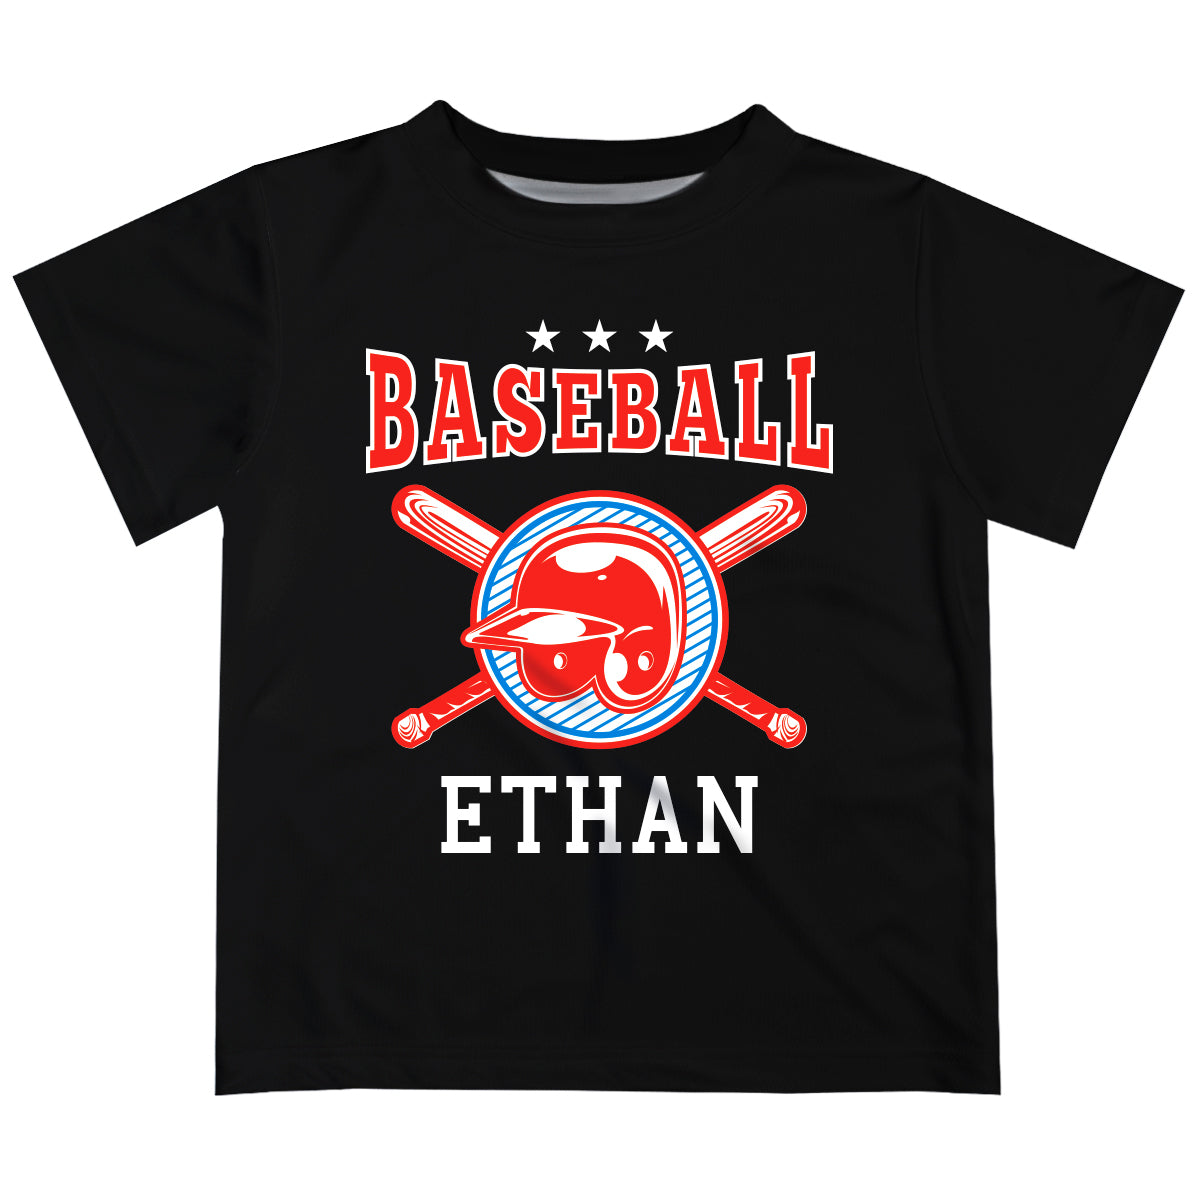 Baseball Name Black and Red Short Sleeve Boys T-Shirt